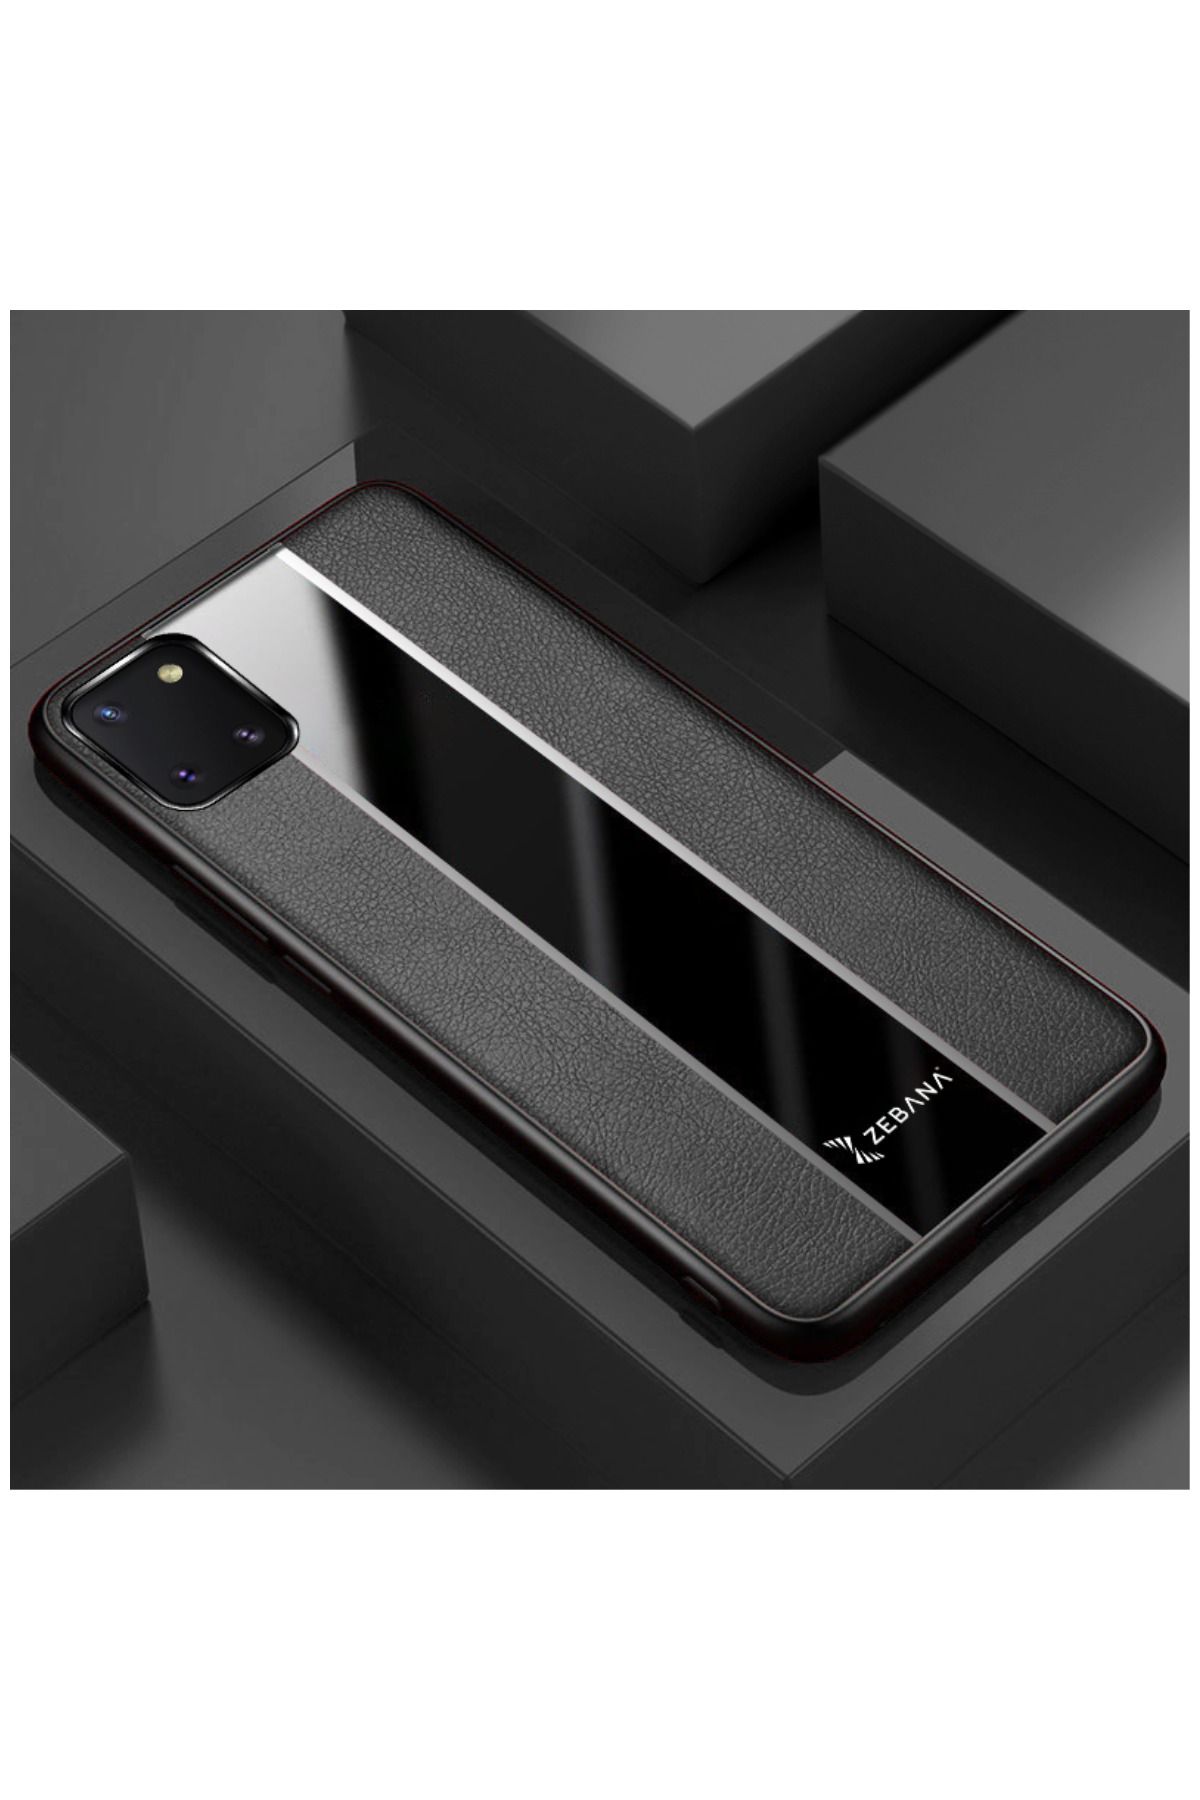 Zebana Samsung Galaxy Note 10 Lite Uyumlu Kılıf Premium Deri Kılıf Siyah